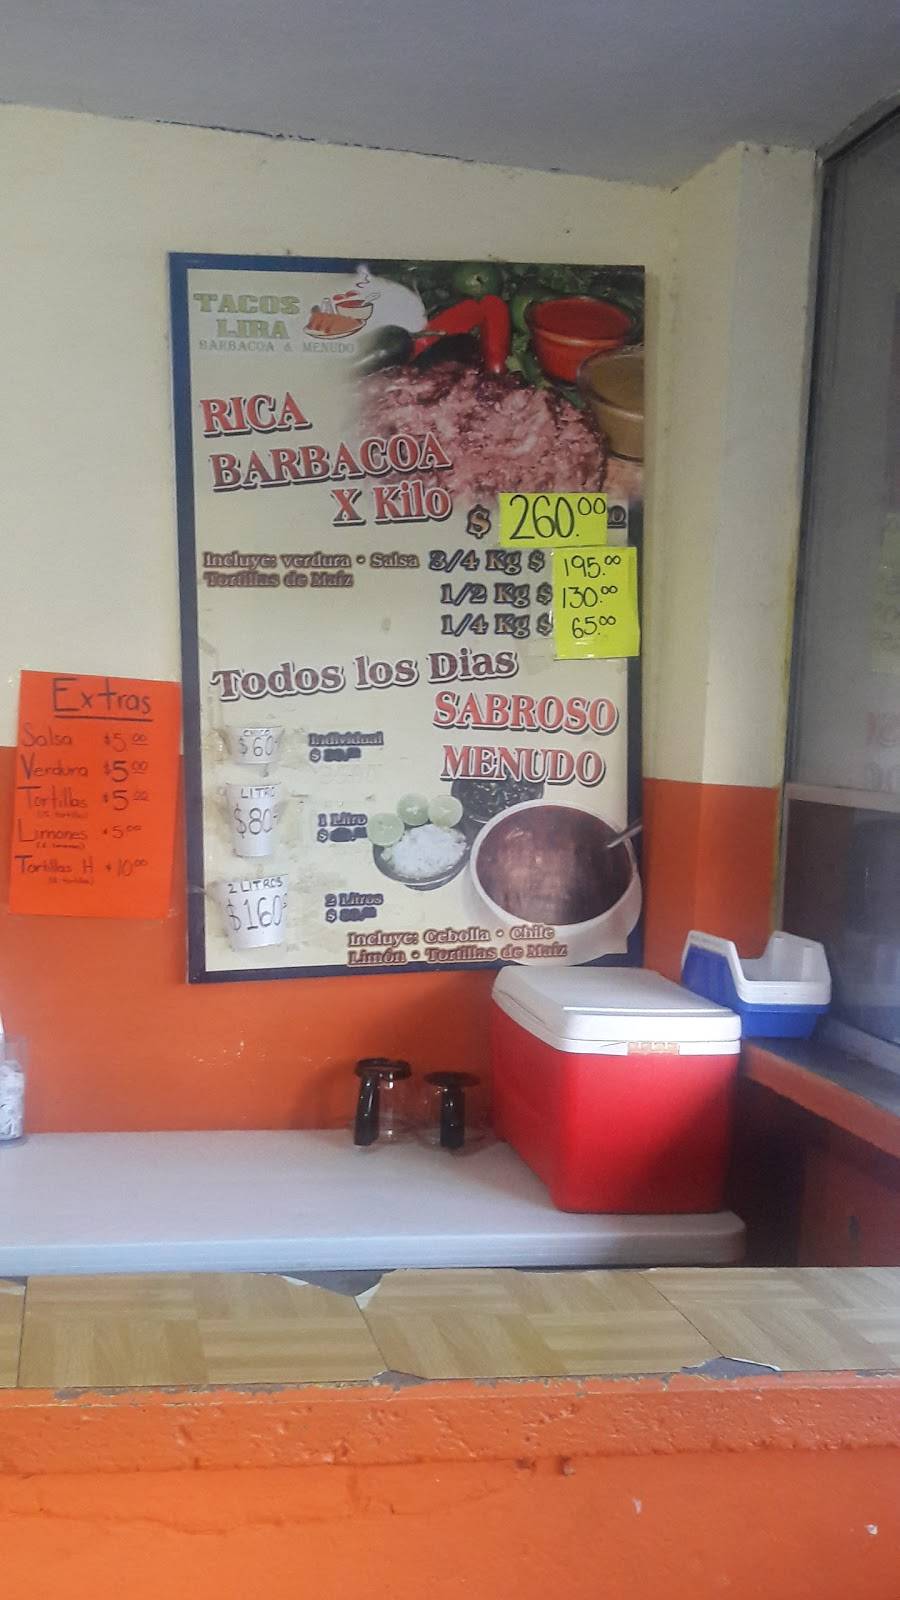 Tacos LIRA | Calle Dr. Mier 5505, Hidalgo, 88160 Nuevo Laredo, Tamps., Mexico | Phone: 867 712 6882